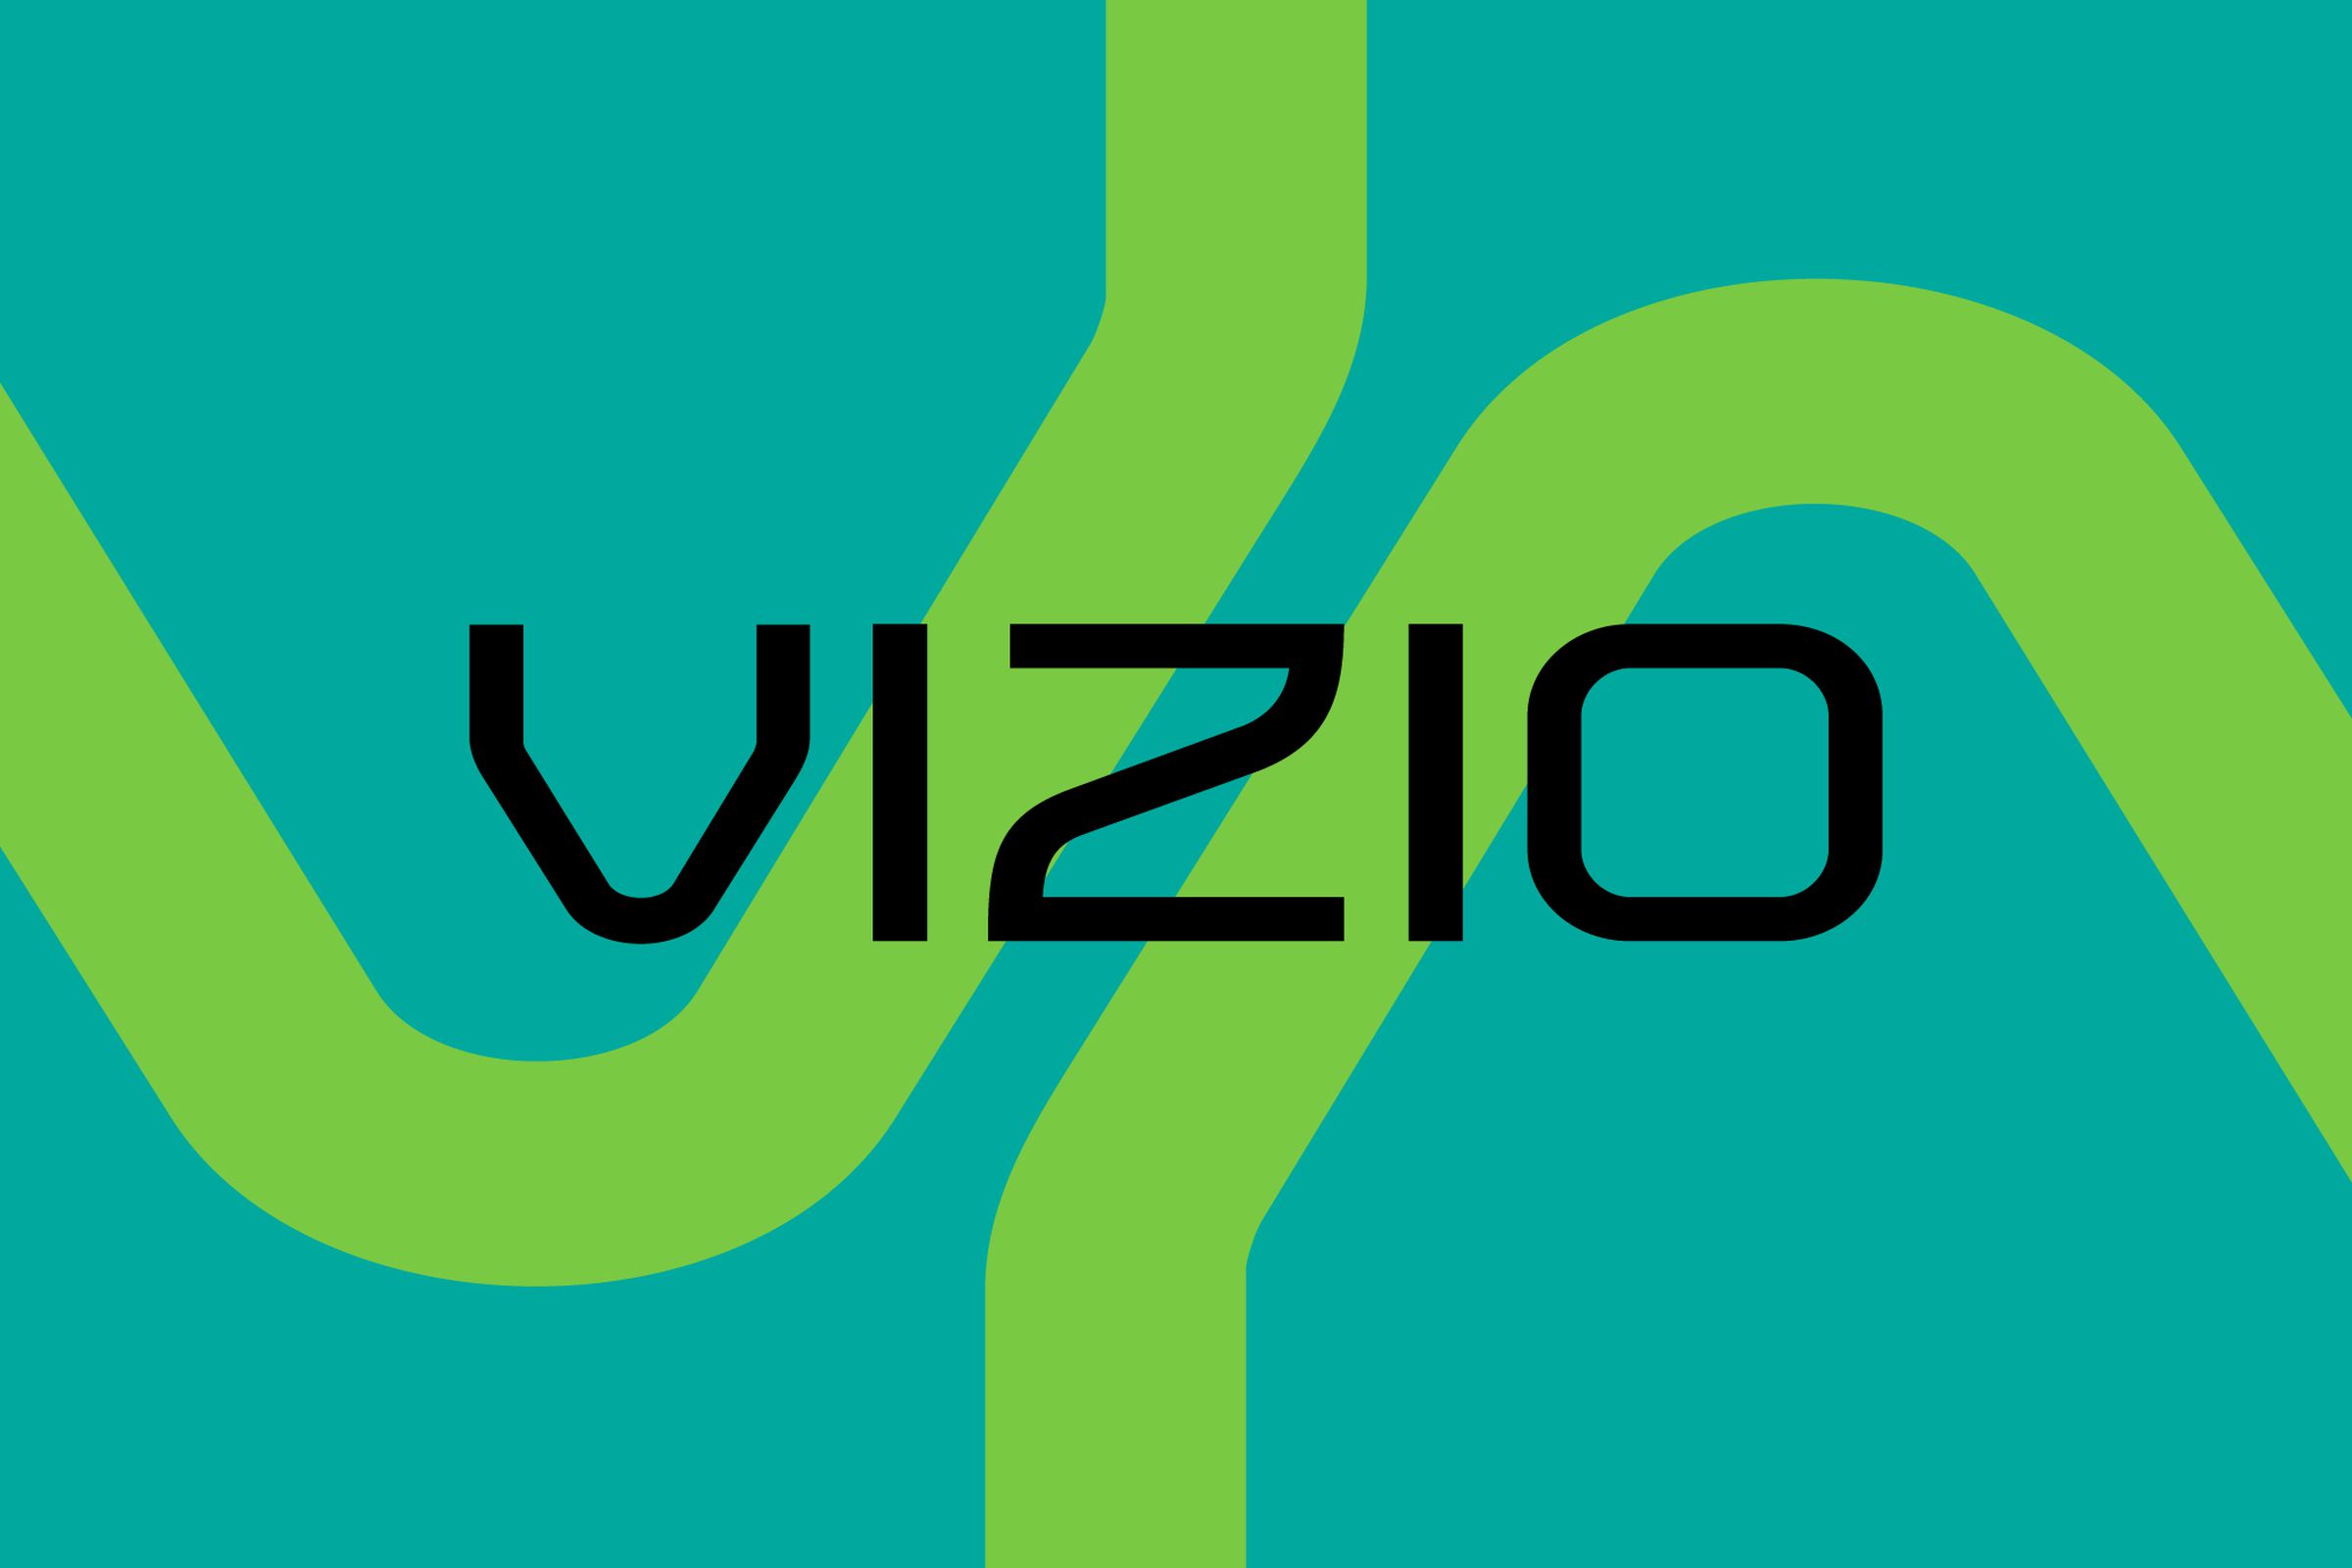 Vector collage of the Vizio logo.